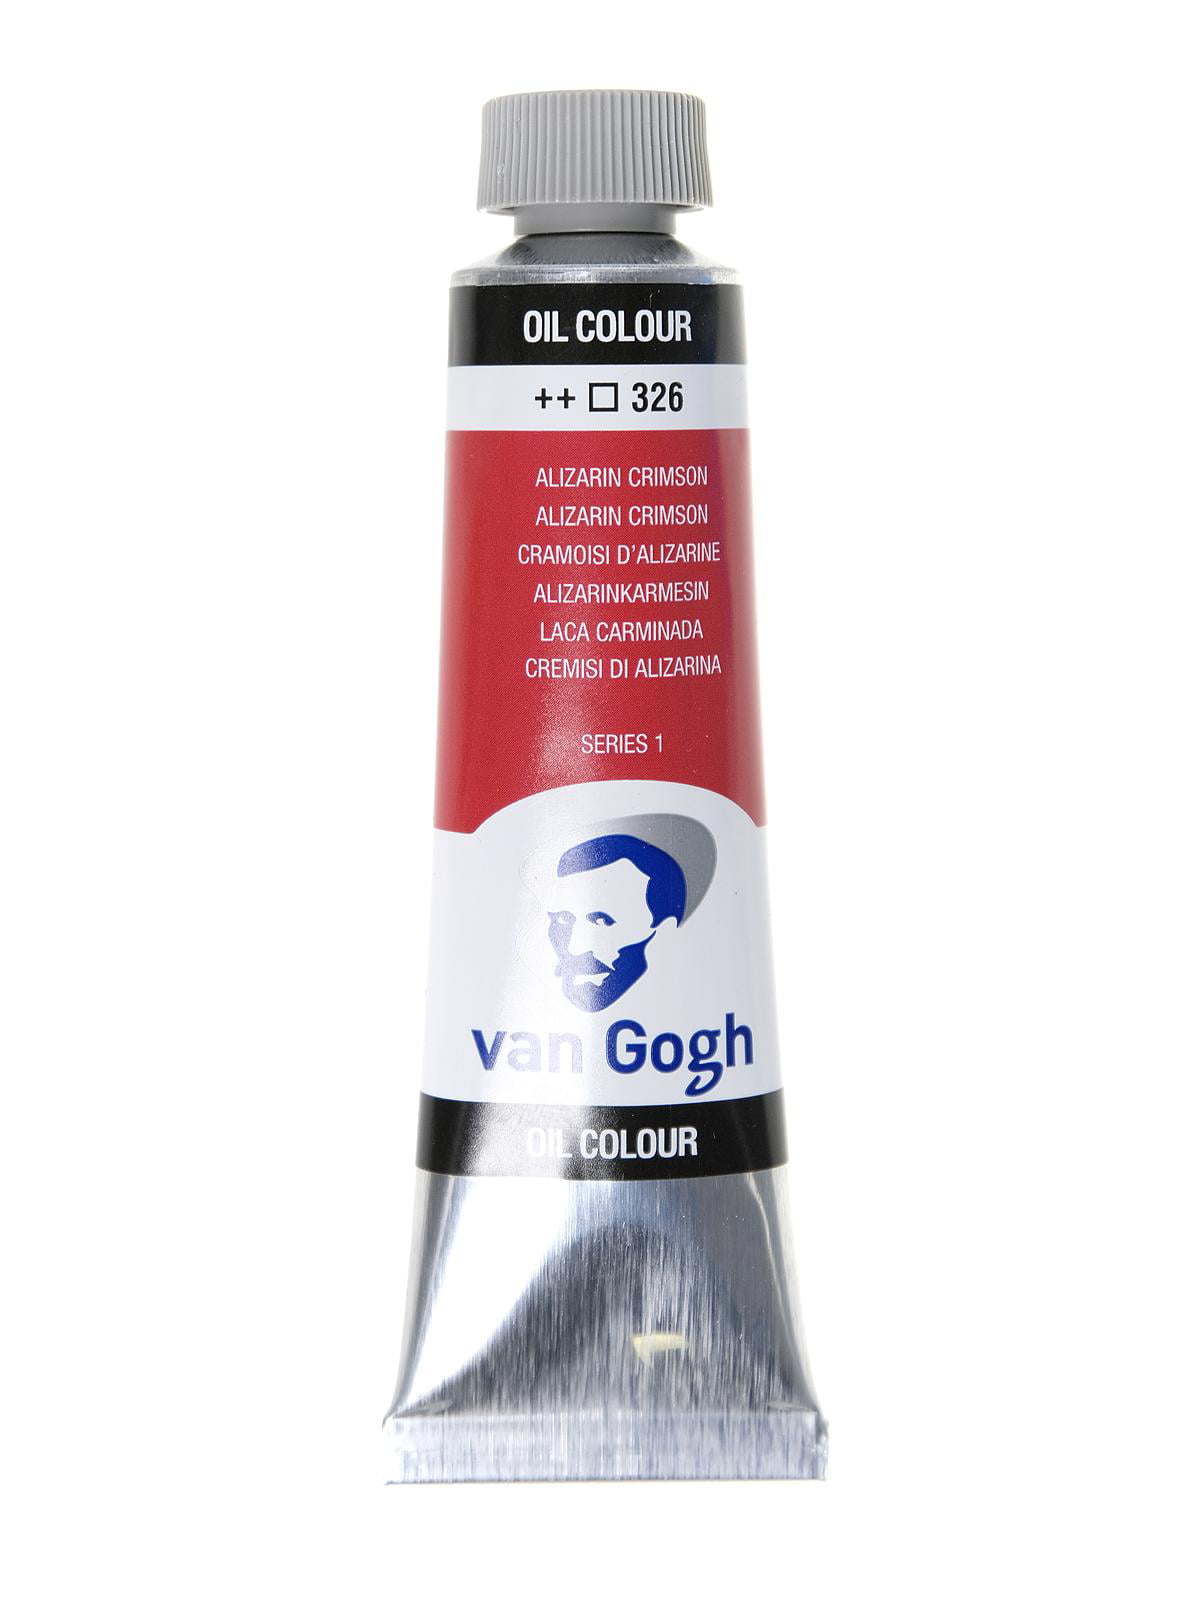 Oil Color alizarin crimson, 40 ml (1.35 oz) (pack of 3) - Walmart.com